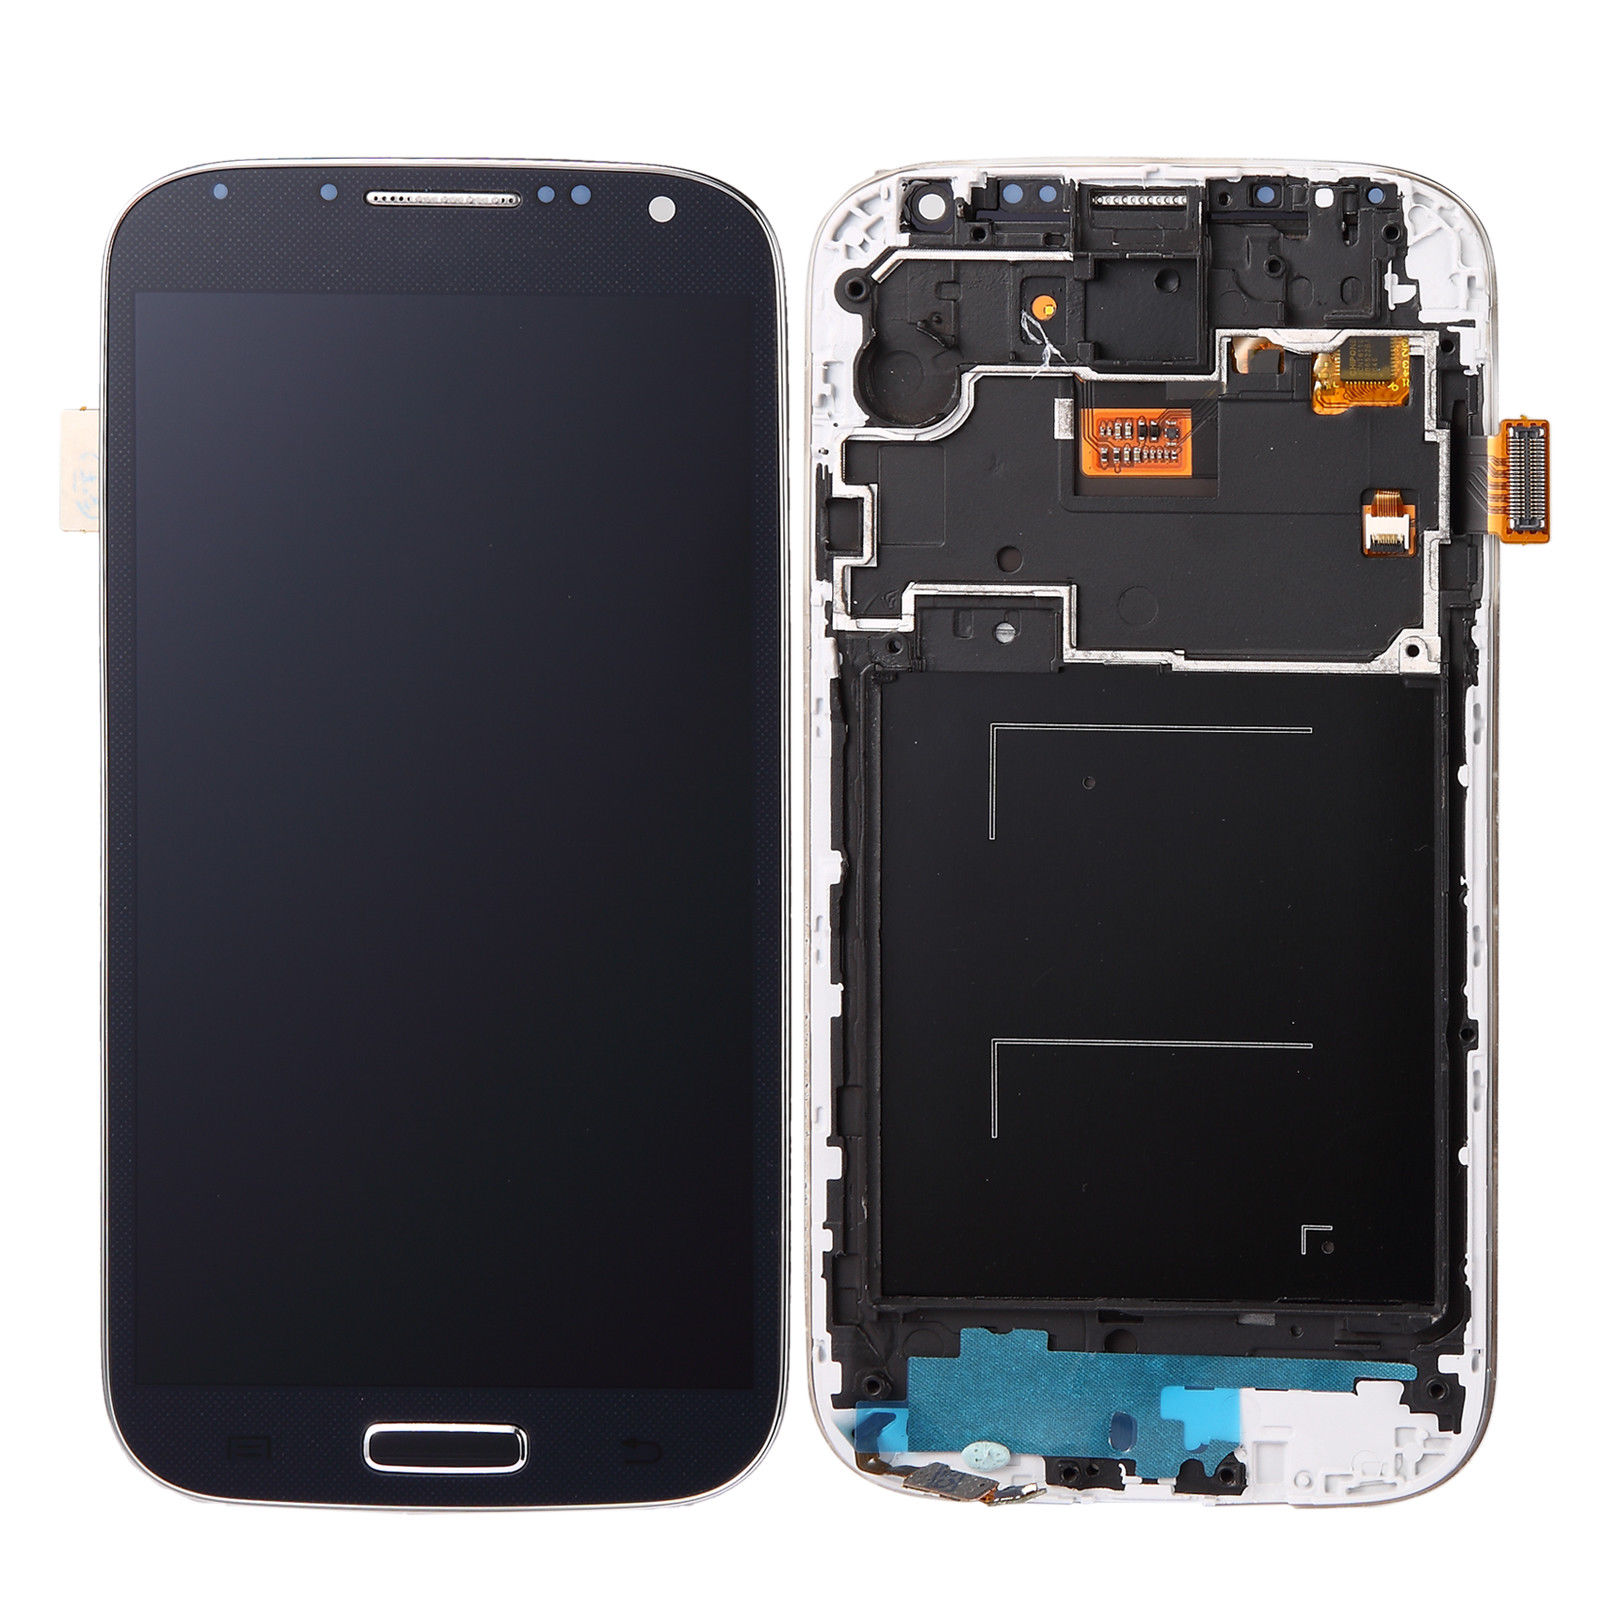 Star Galaxy S4 I9500 (Dual Sim N9500) - китайский клон смартфона, видео и характеристики